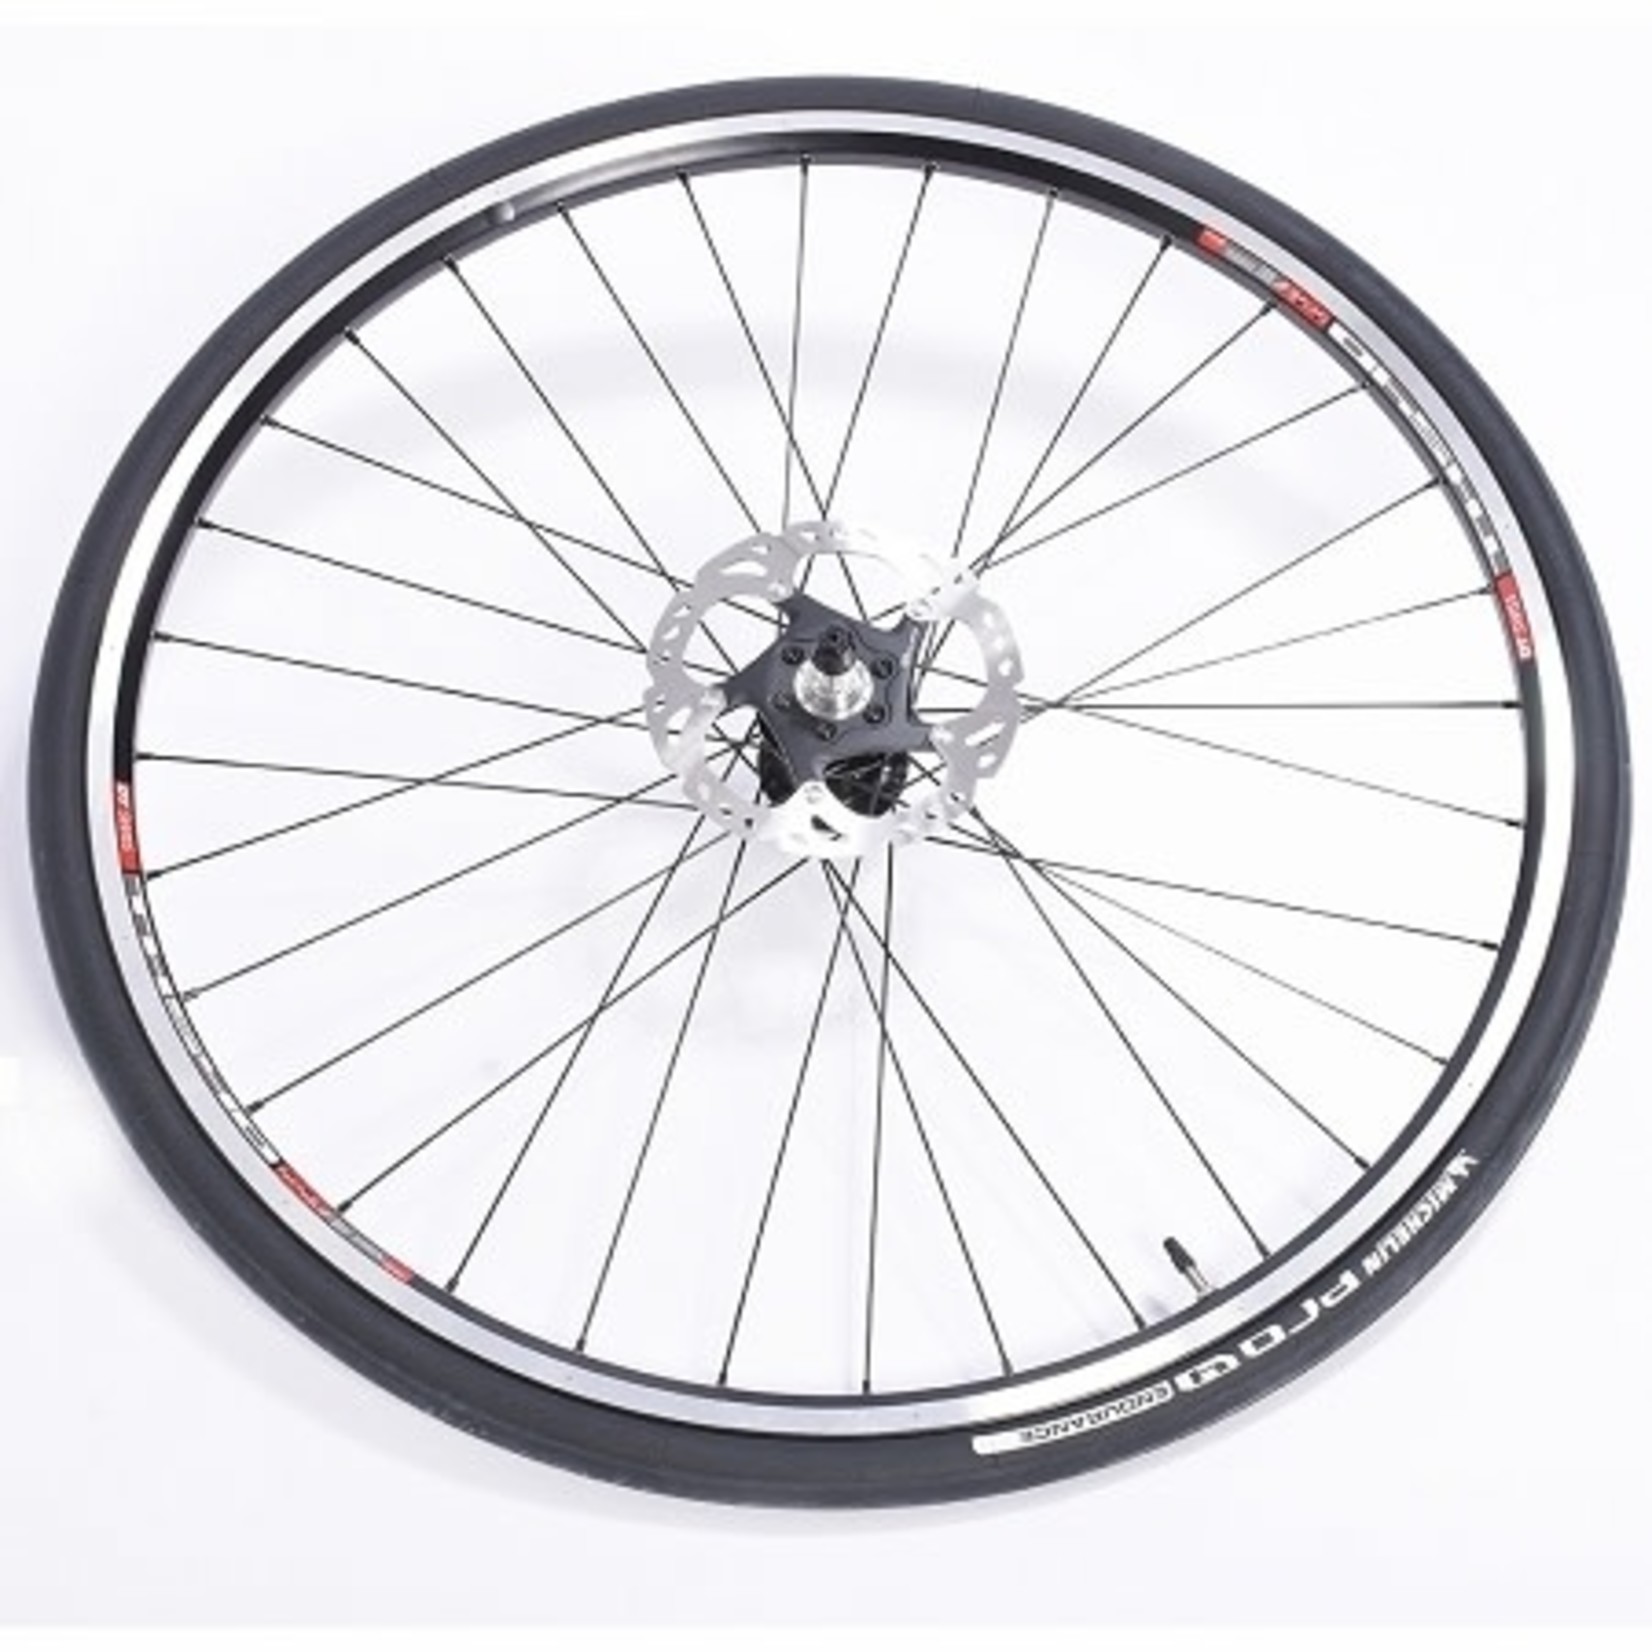 Custom Built Road bike wheels - Rim Brake - Aluminum - Clincher